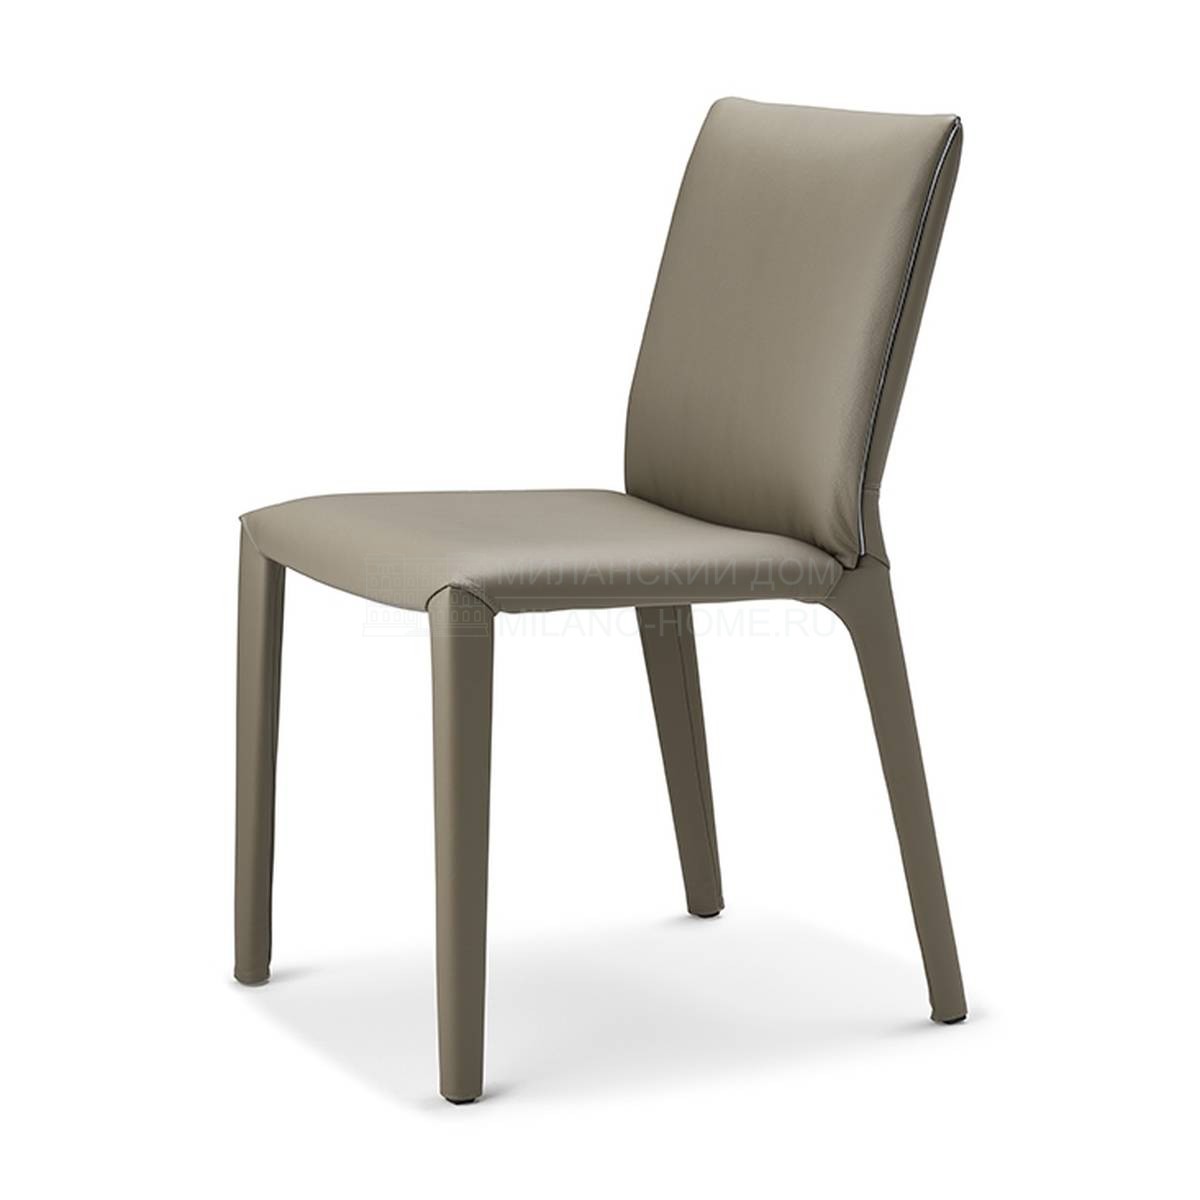 Кожаный стул Penelope chair из Италии фабрики CATTELAN ITALIA